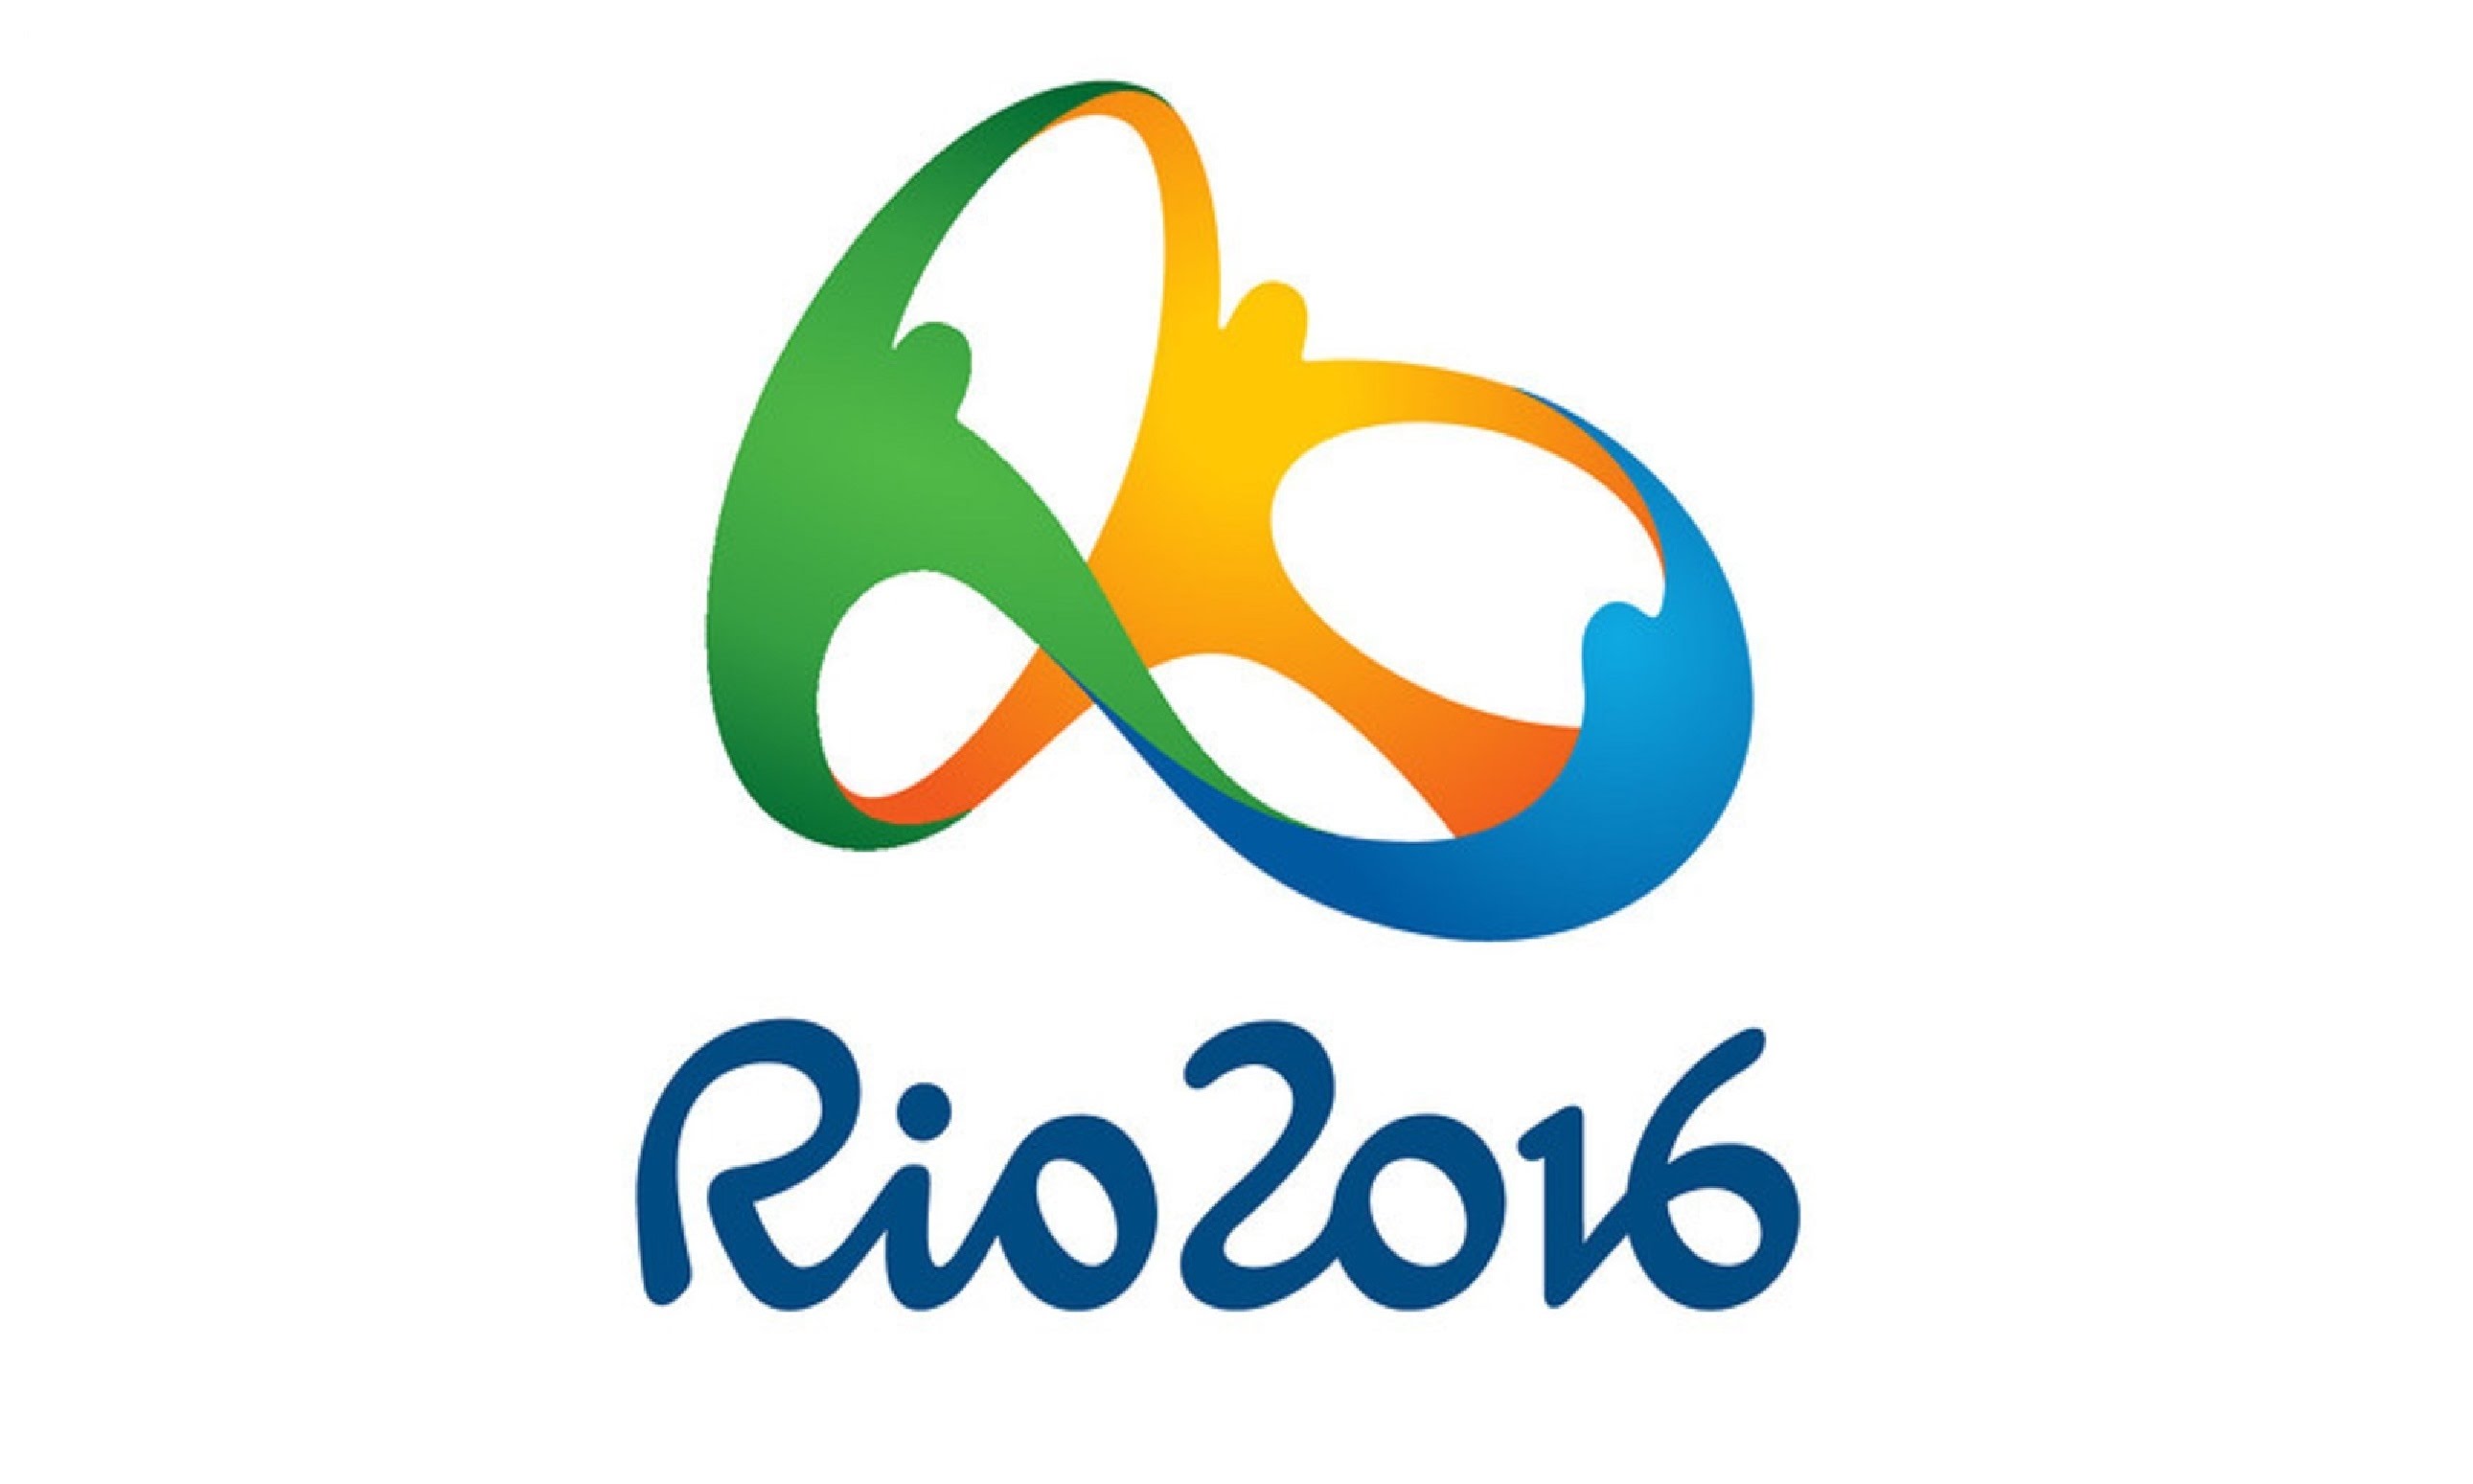 Rio Olympic